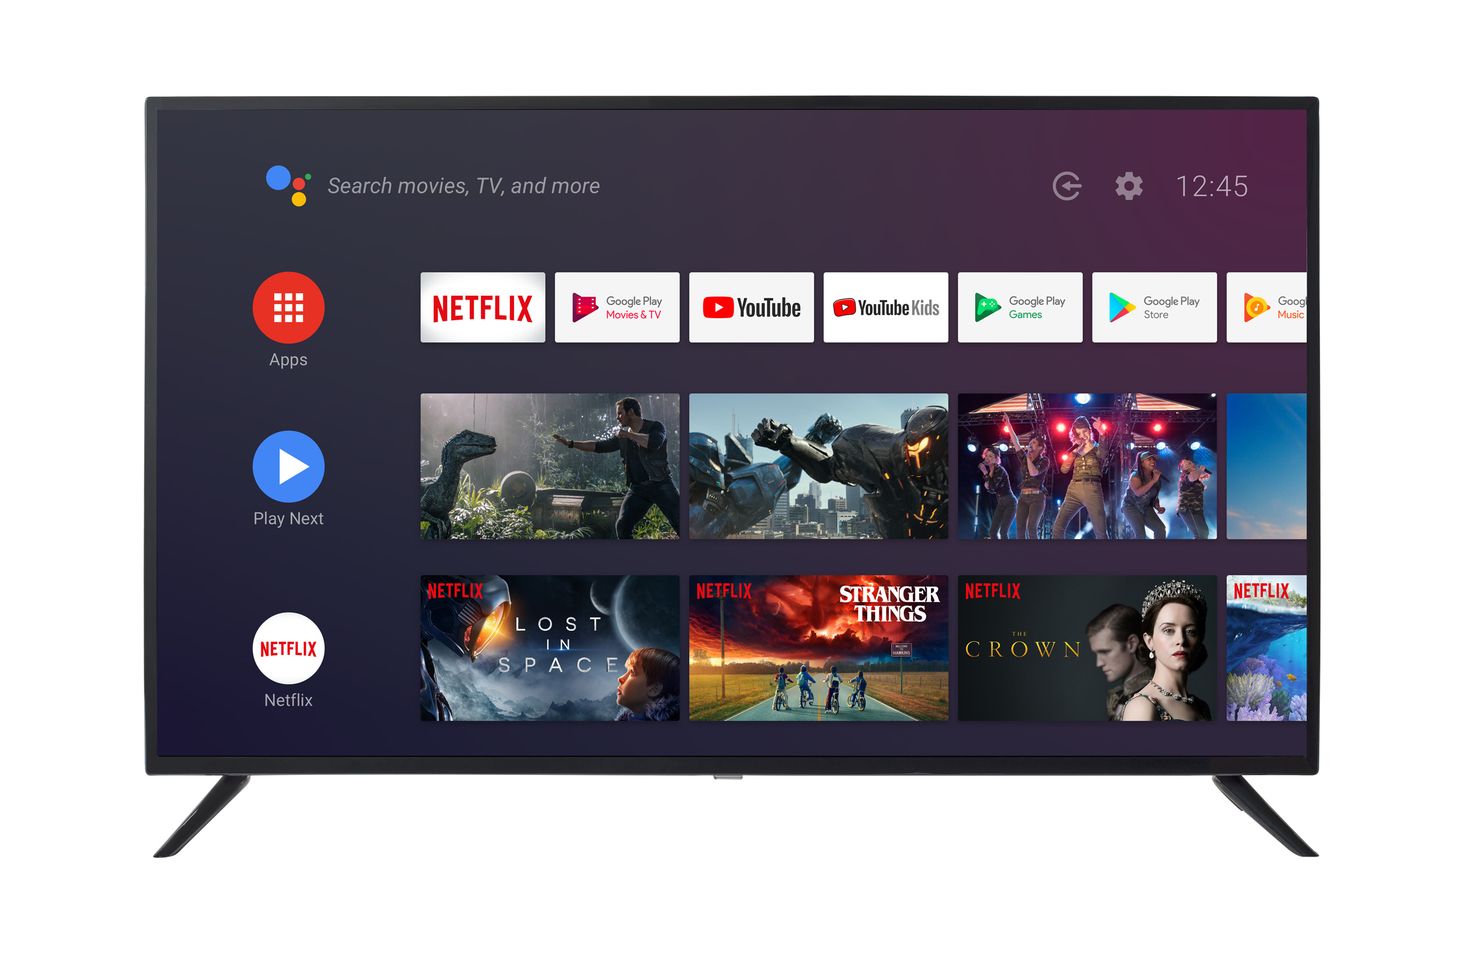 Netflix DAZN Chromecast Wi-Fi Bluetooth HDR10 Andrino Televisor AN43U01 43 Pulgadas 109 cm 4K UHD LED TV Inteligente T2/S2/C Android TV Asistente de Google Google Play Store Prime Video 